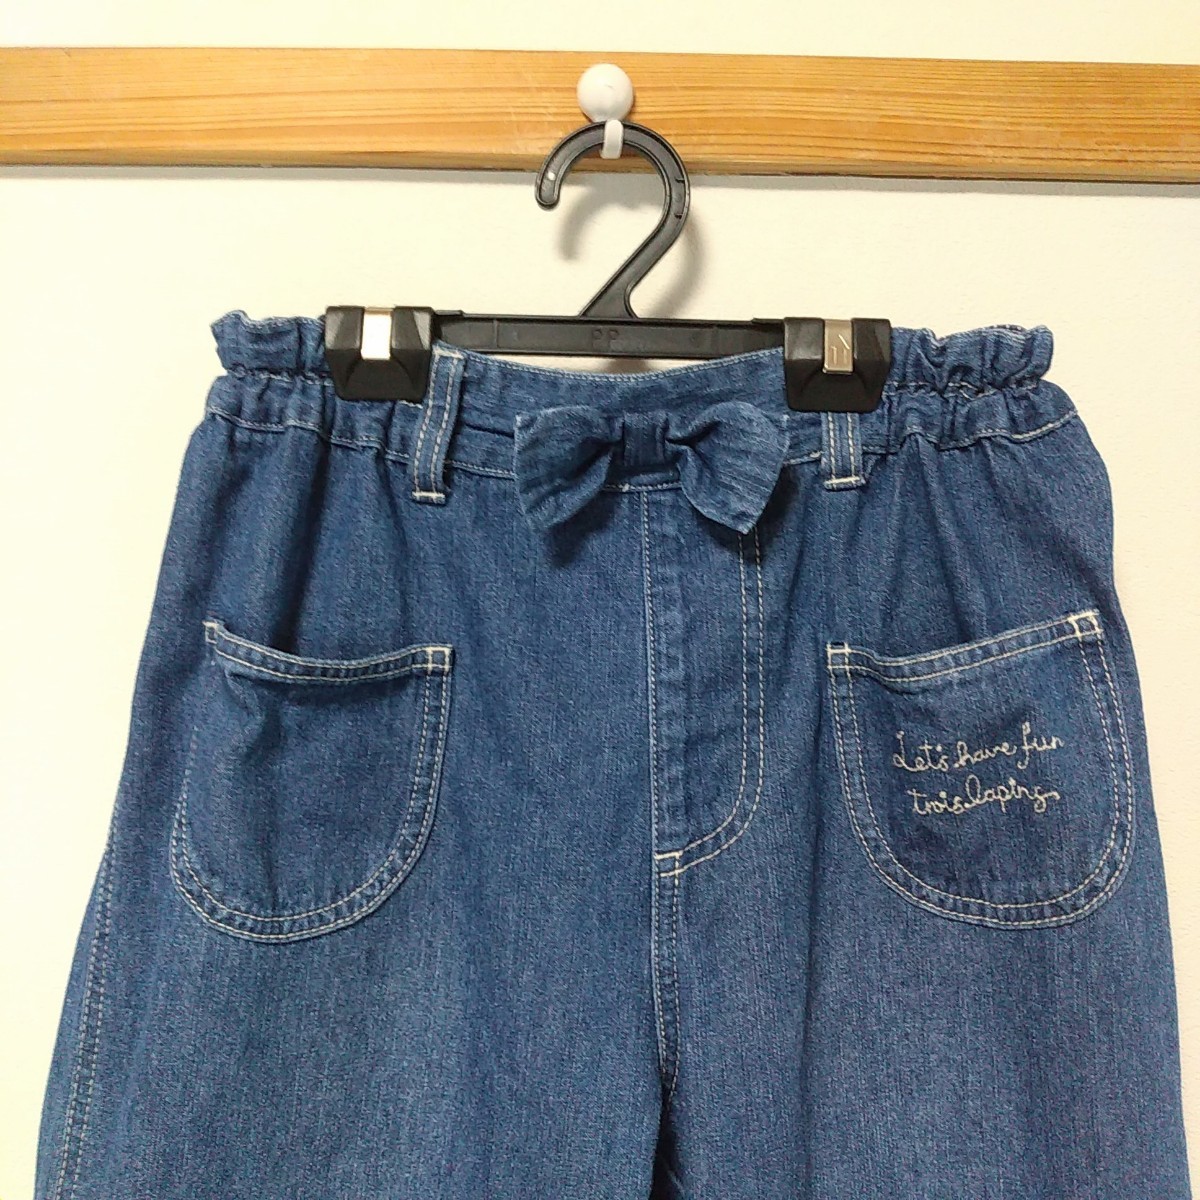  Toro wa Lapin (KP) Denim широкий брюки 140 джинсы 